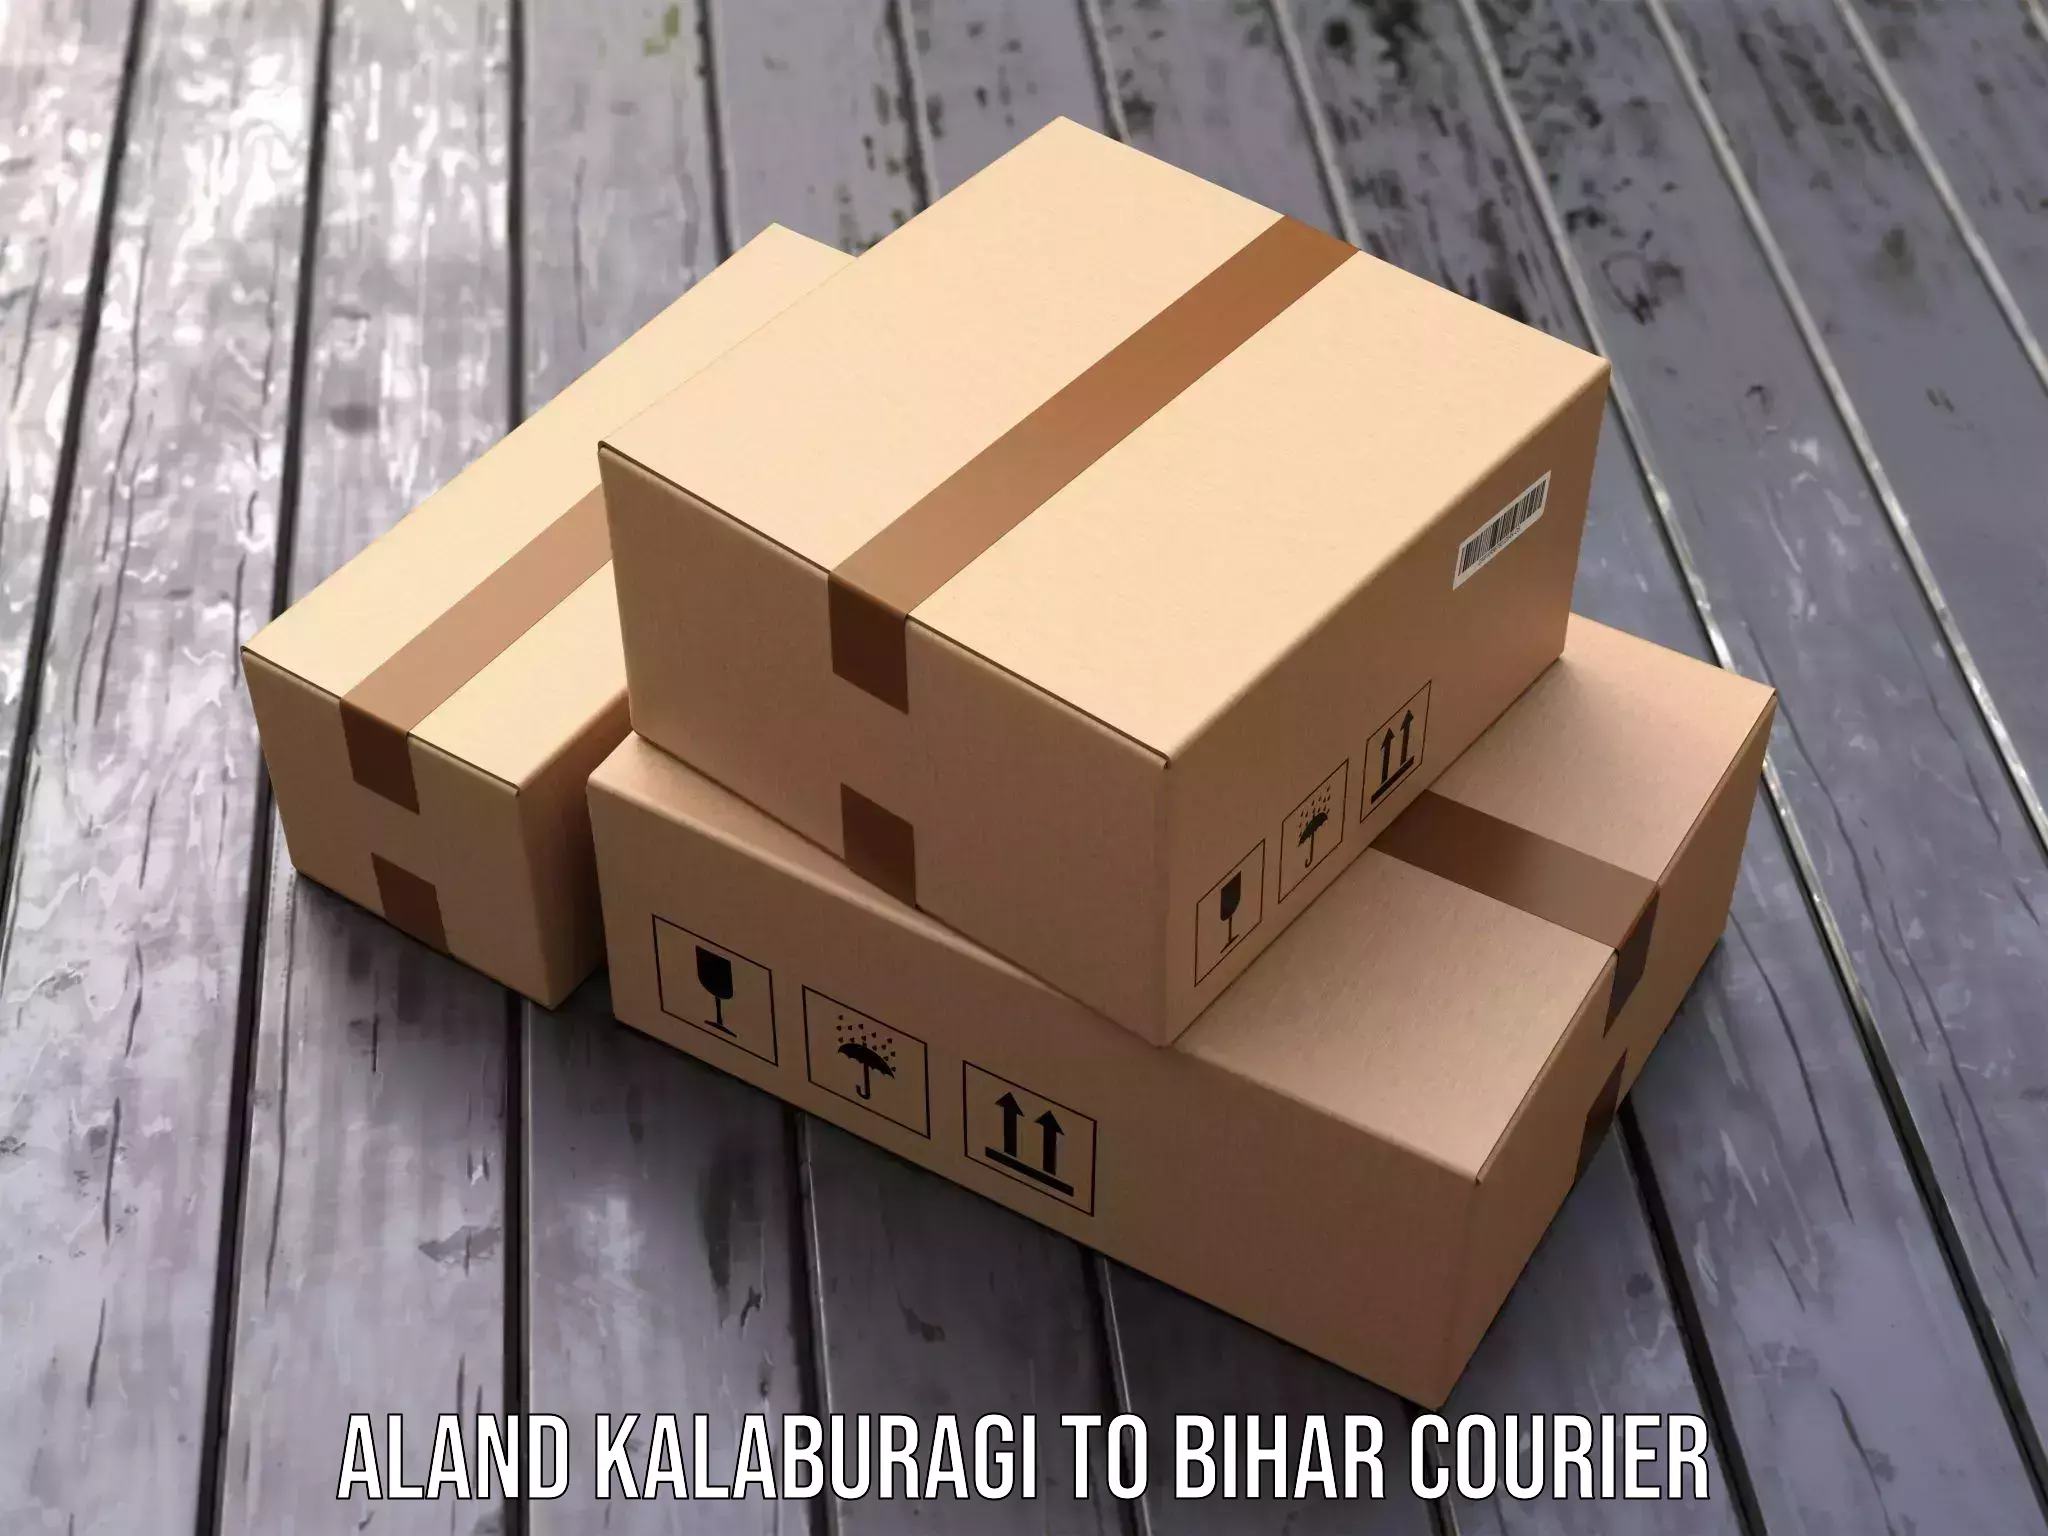 Package delivery network Aland Kalaburagi to Bihar